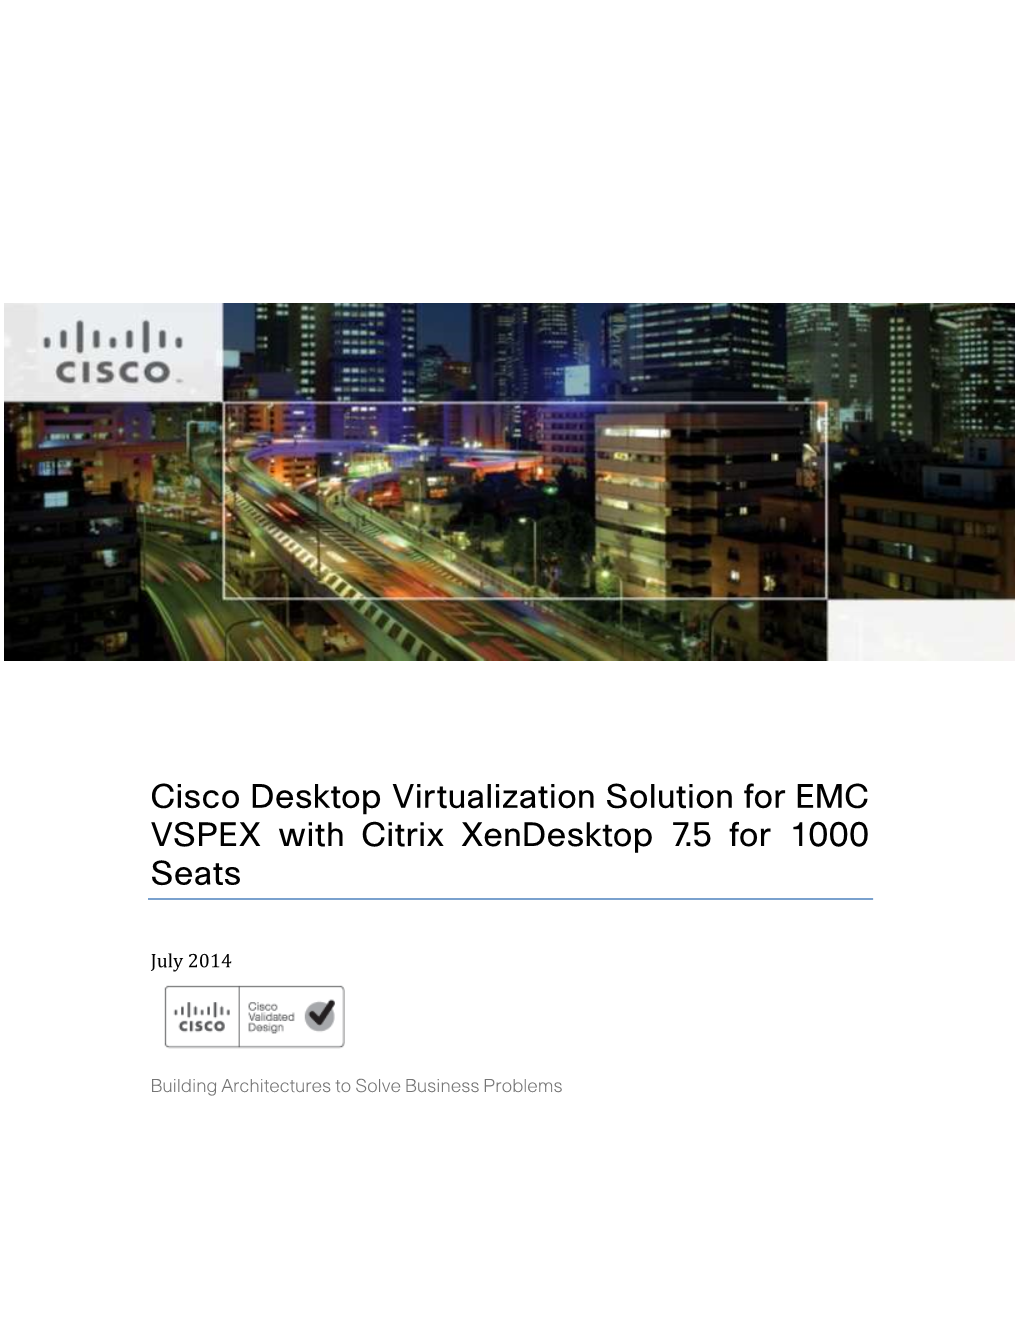 Cisco Desktop Virtualization Solution for EMC VSPEX with Citrix Xendesktop 7.5 for 1000 Seats